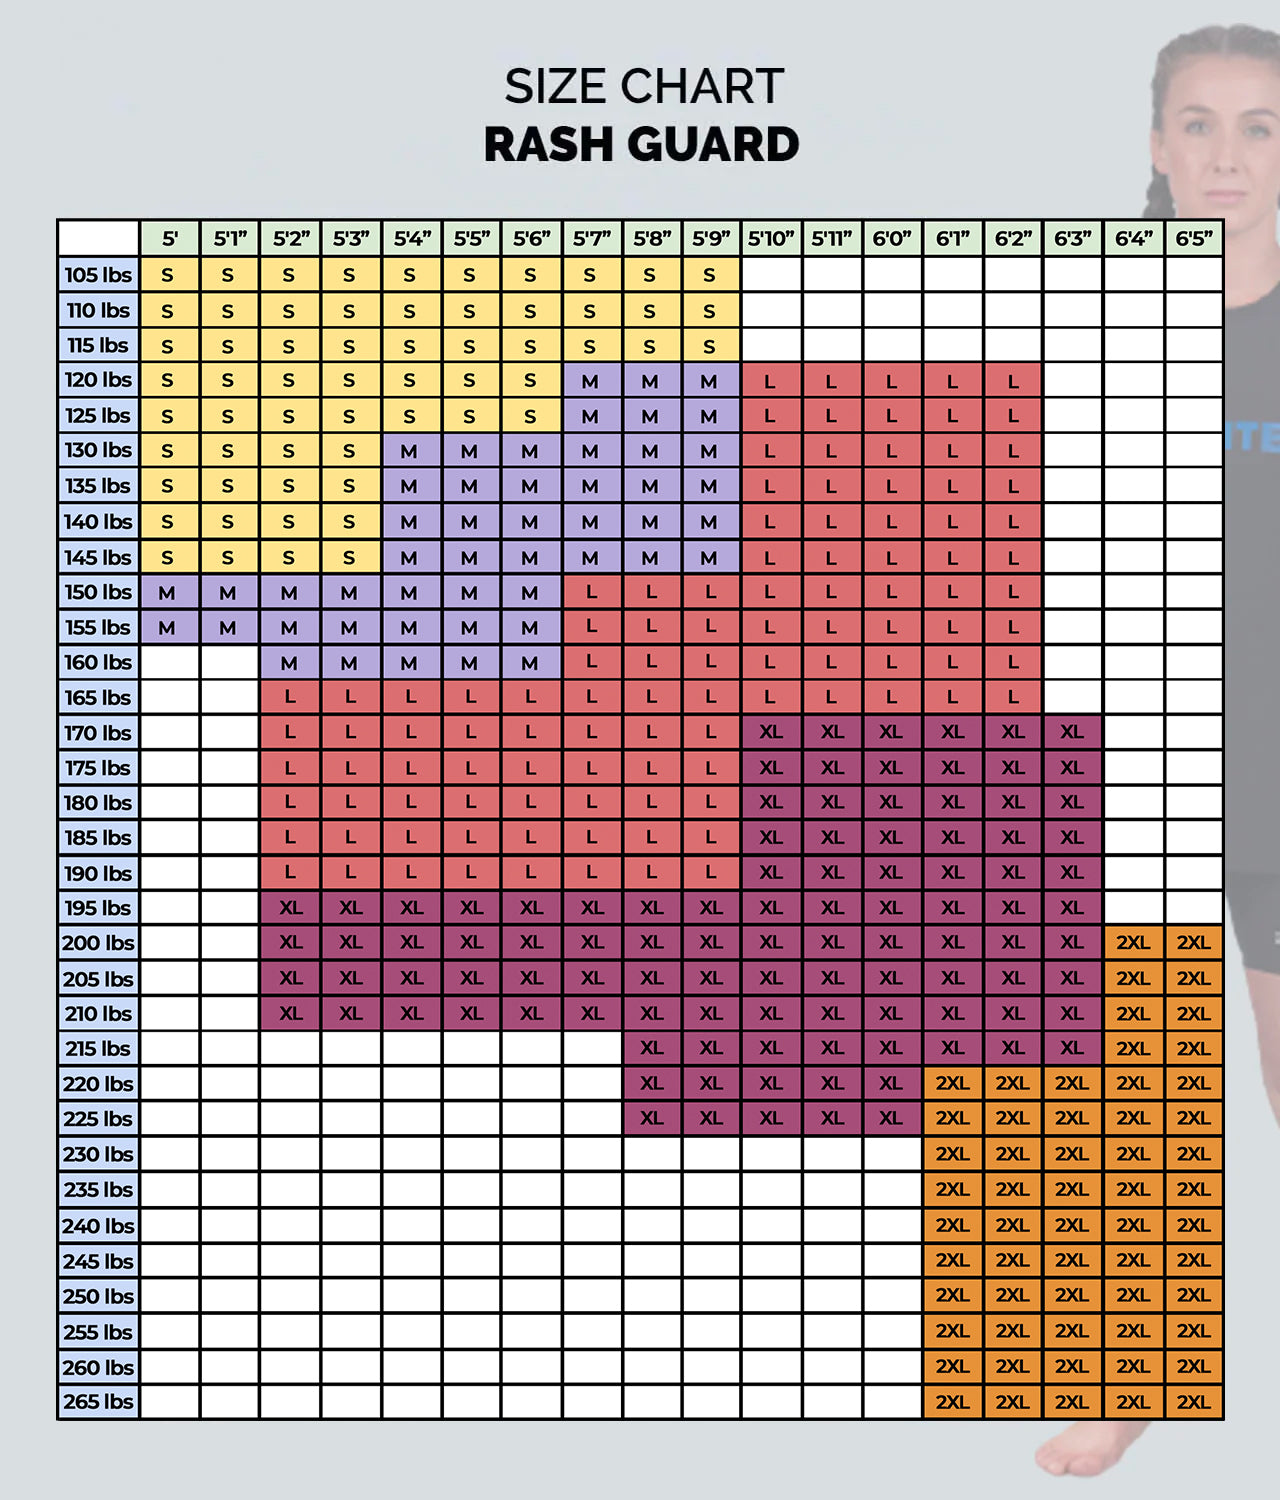 Elite Sports Women's Standard Red Short Sleeve Jiu Jitsu BJJ Rash Guard Size Guide